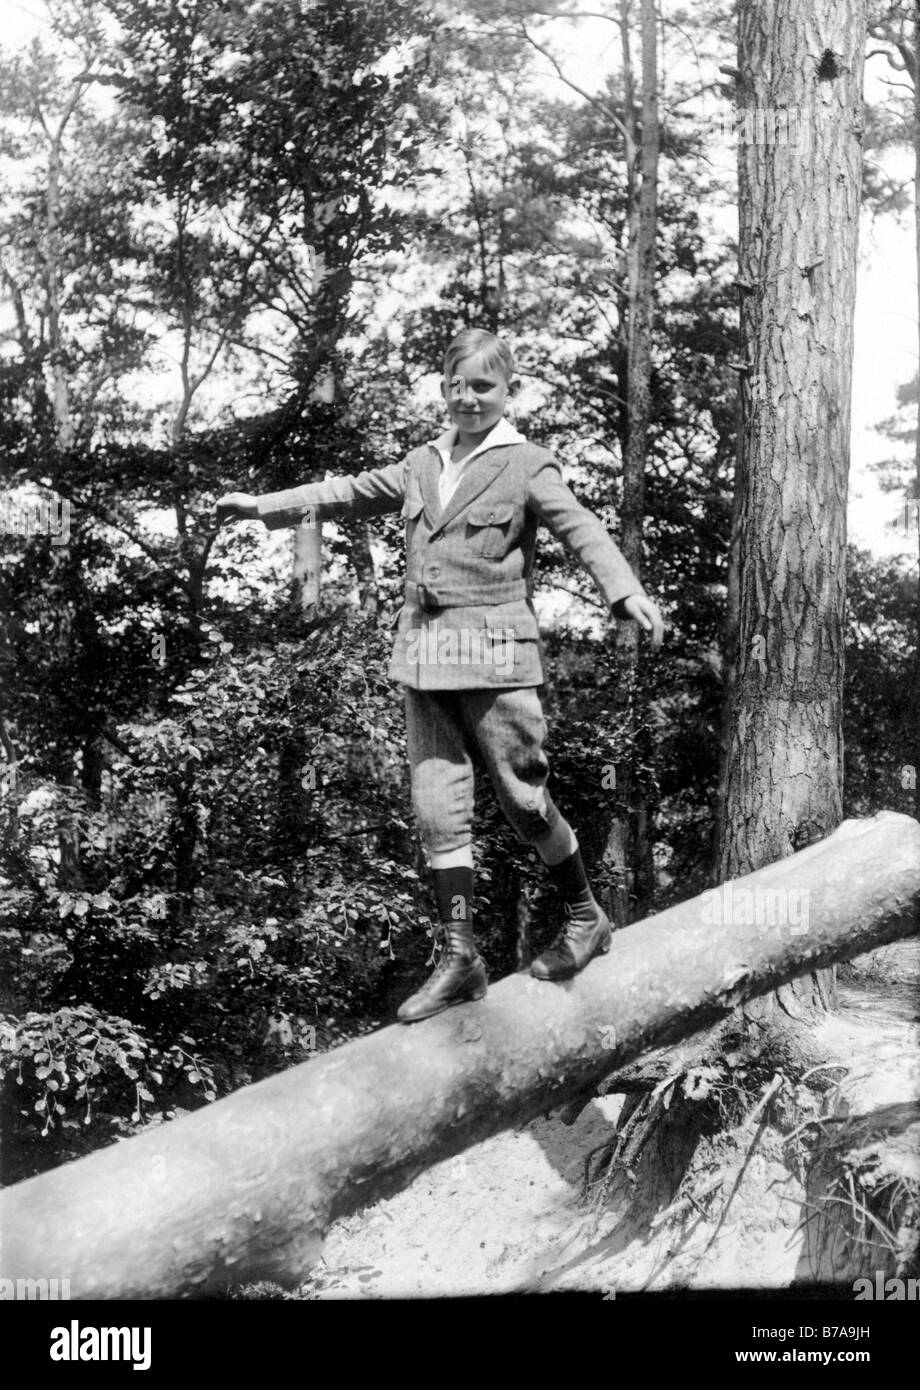 Foto histórica, boy equilibrio sobre tronco de árbol, ca. 1920 Foto de stock